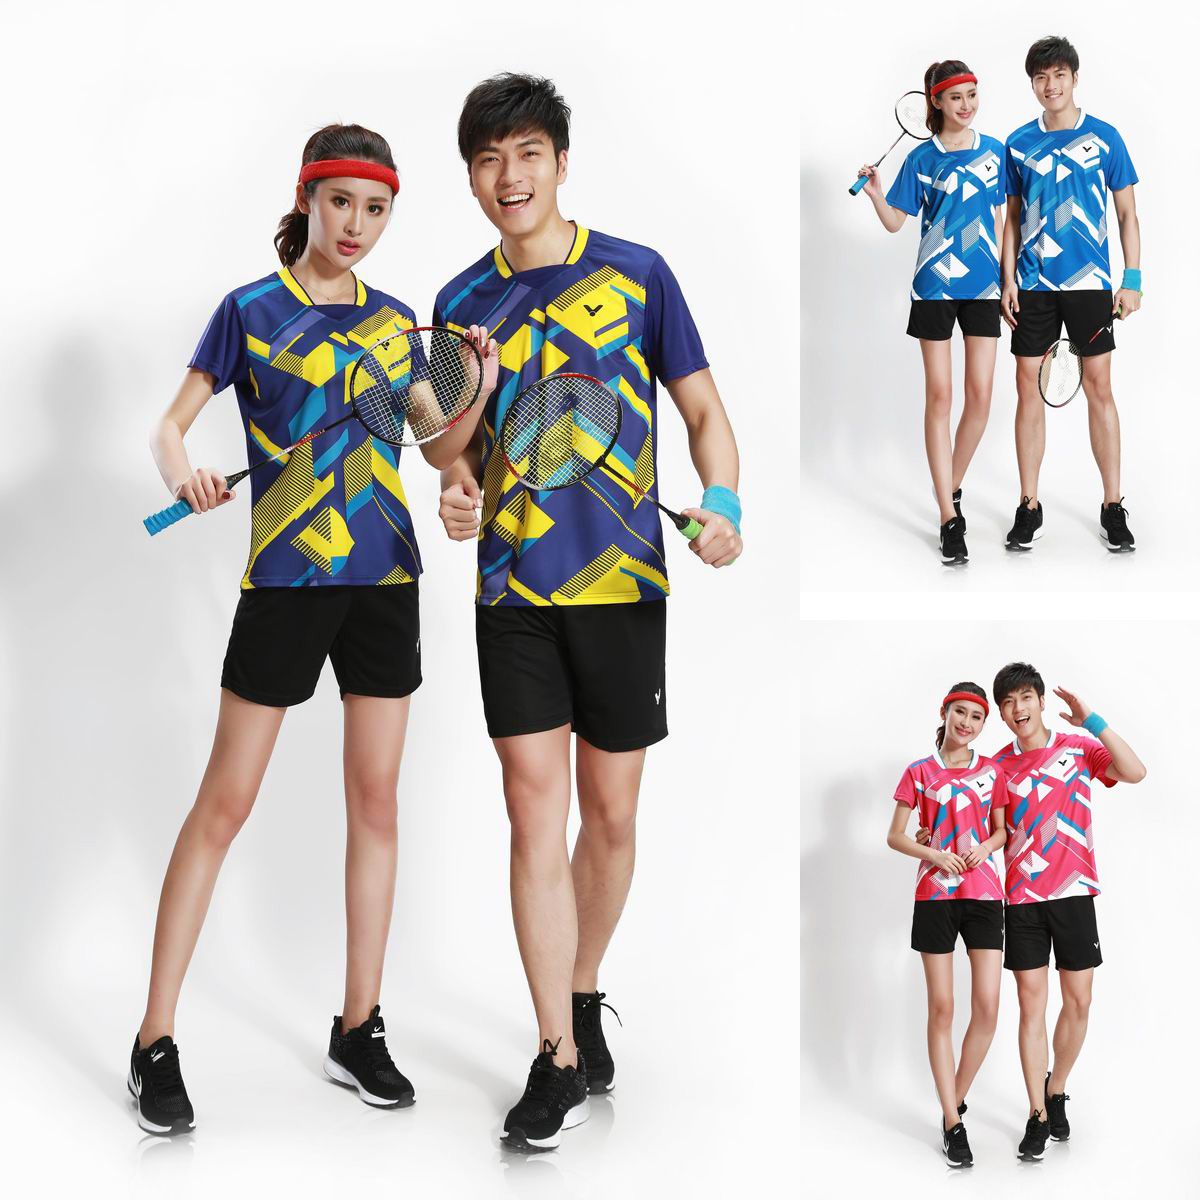 New victor men's sports Tops tennis/Table tennis clothes set T shirts+shorts 